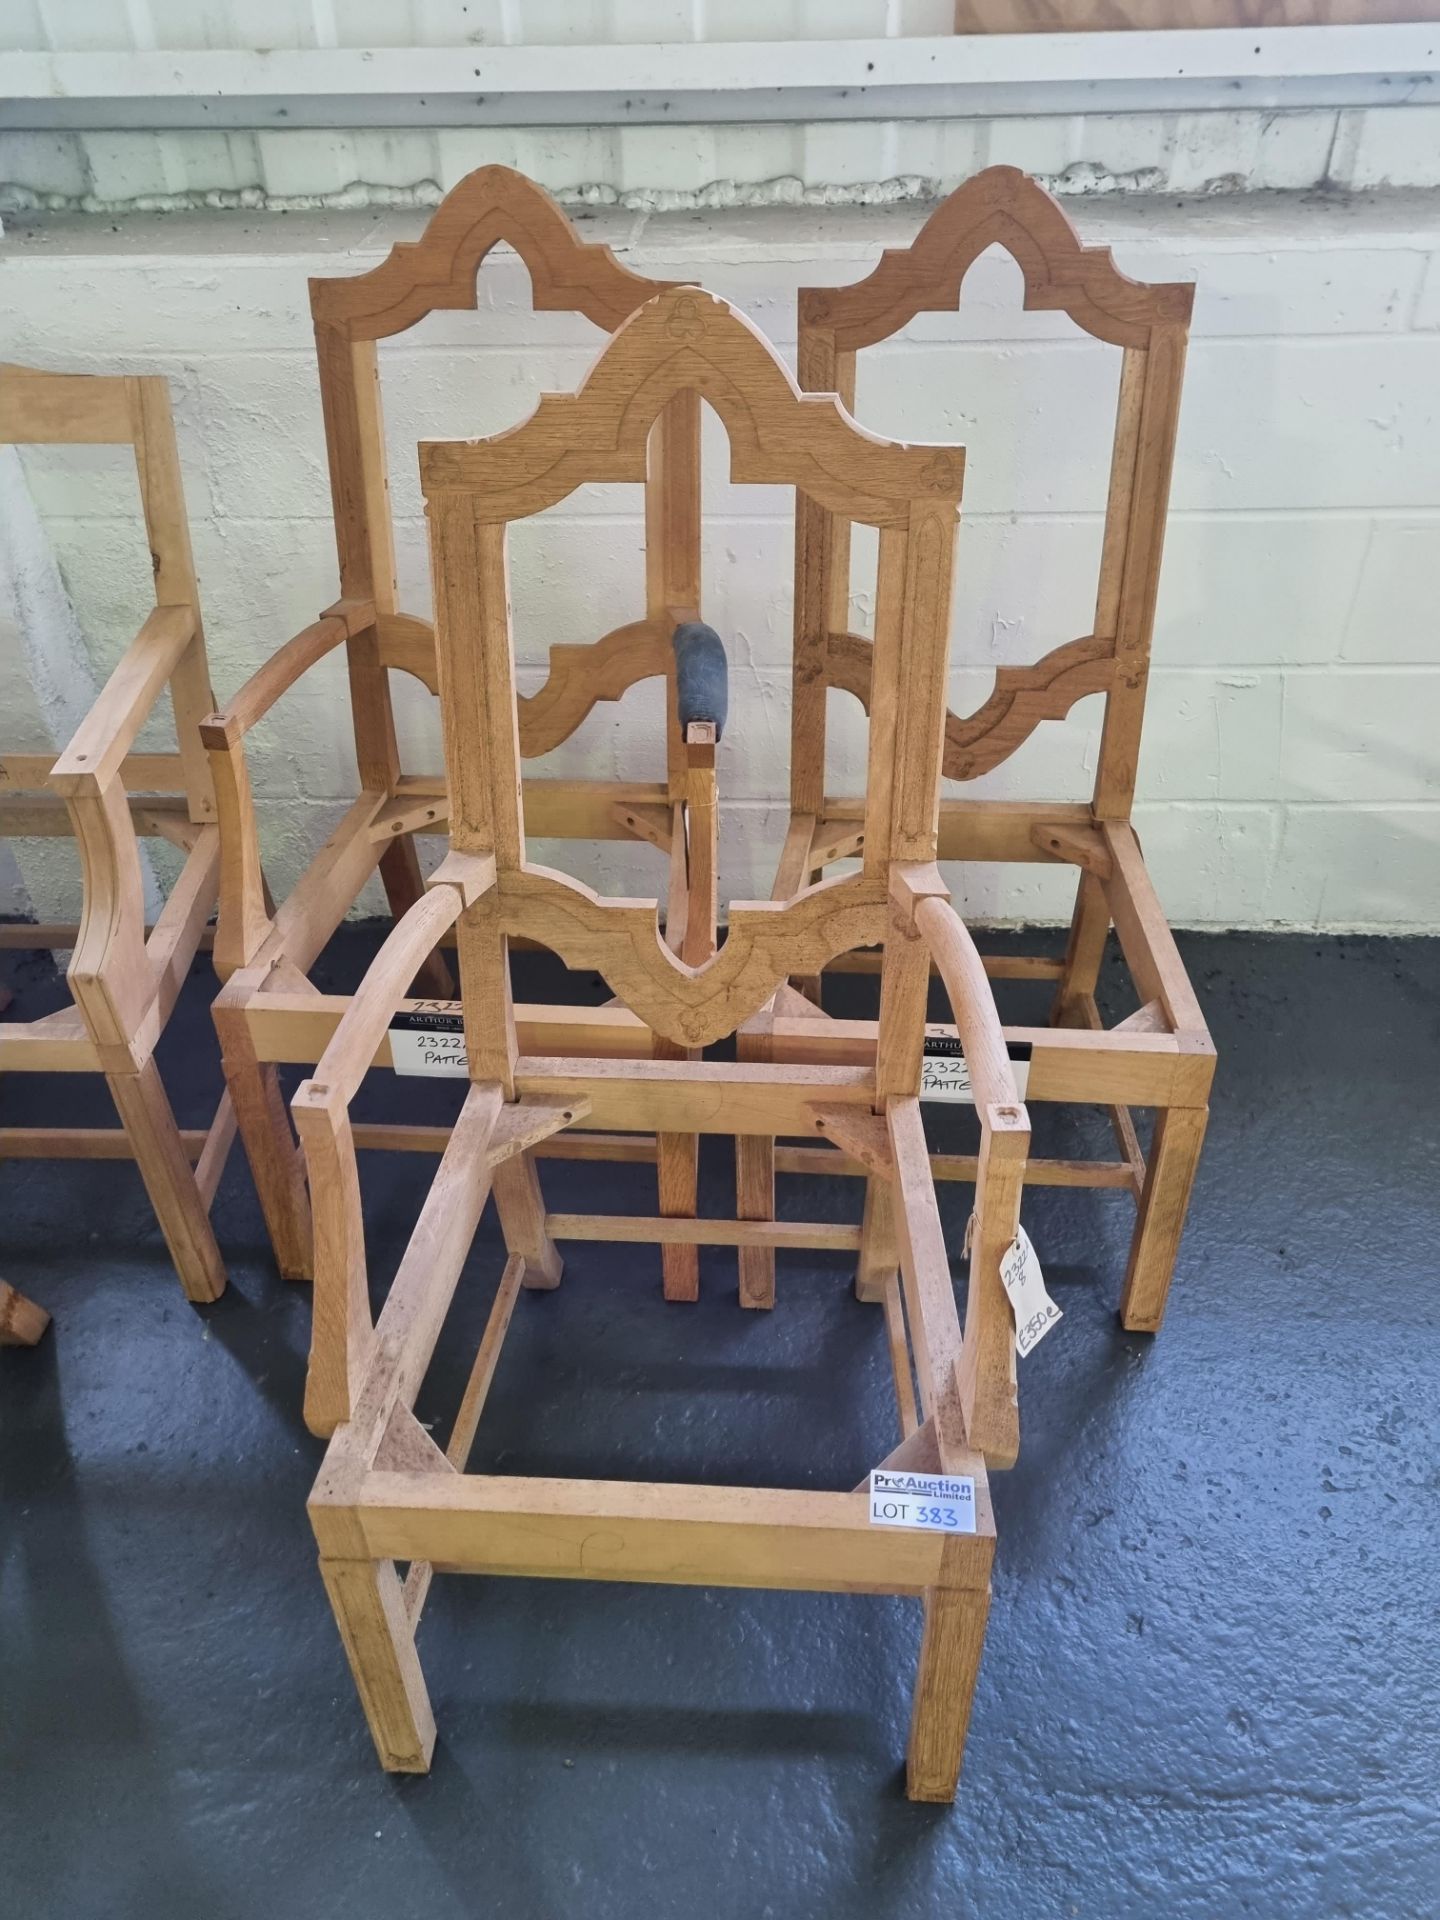 3x Arthur Brett Gothic style chair frames Height 118cm Width 58cm Depth 69cm